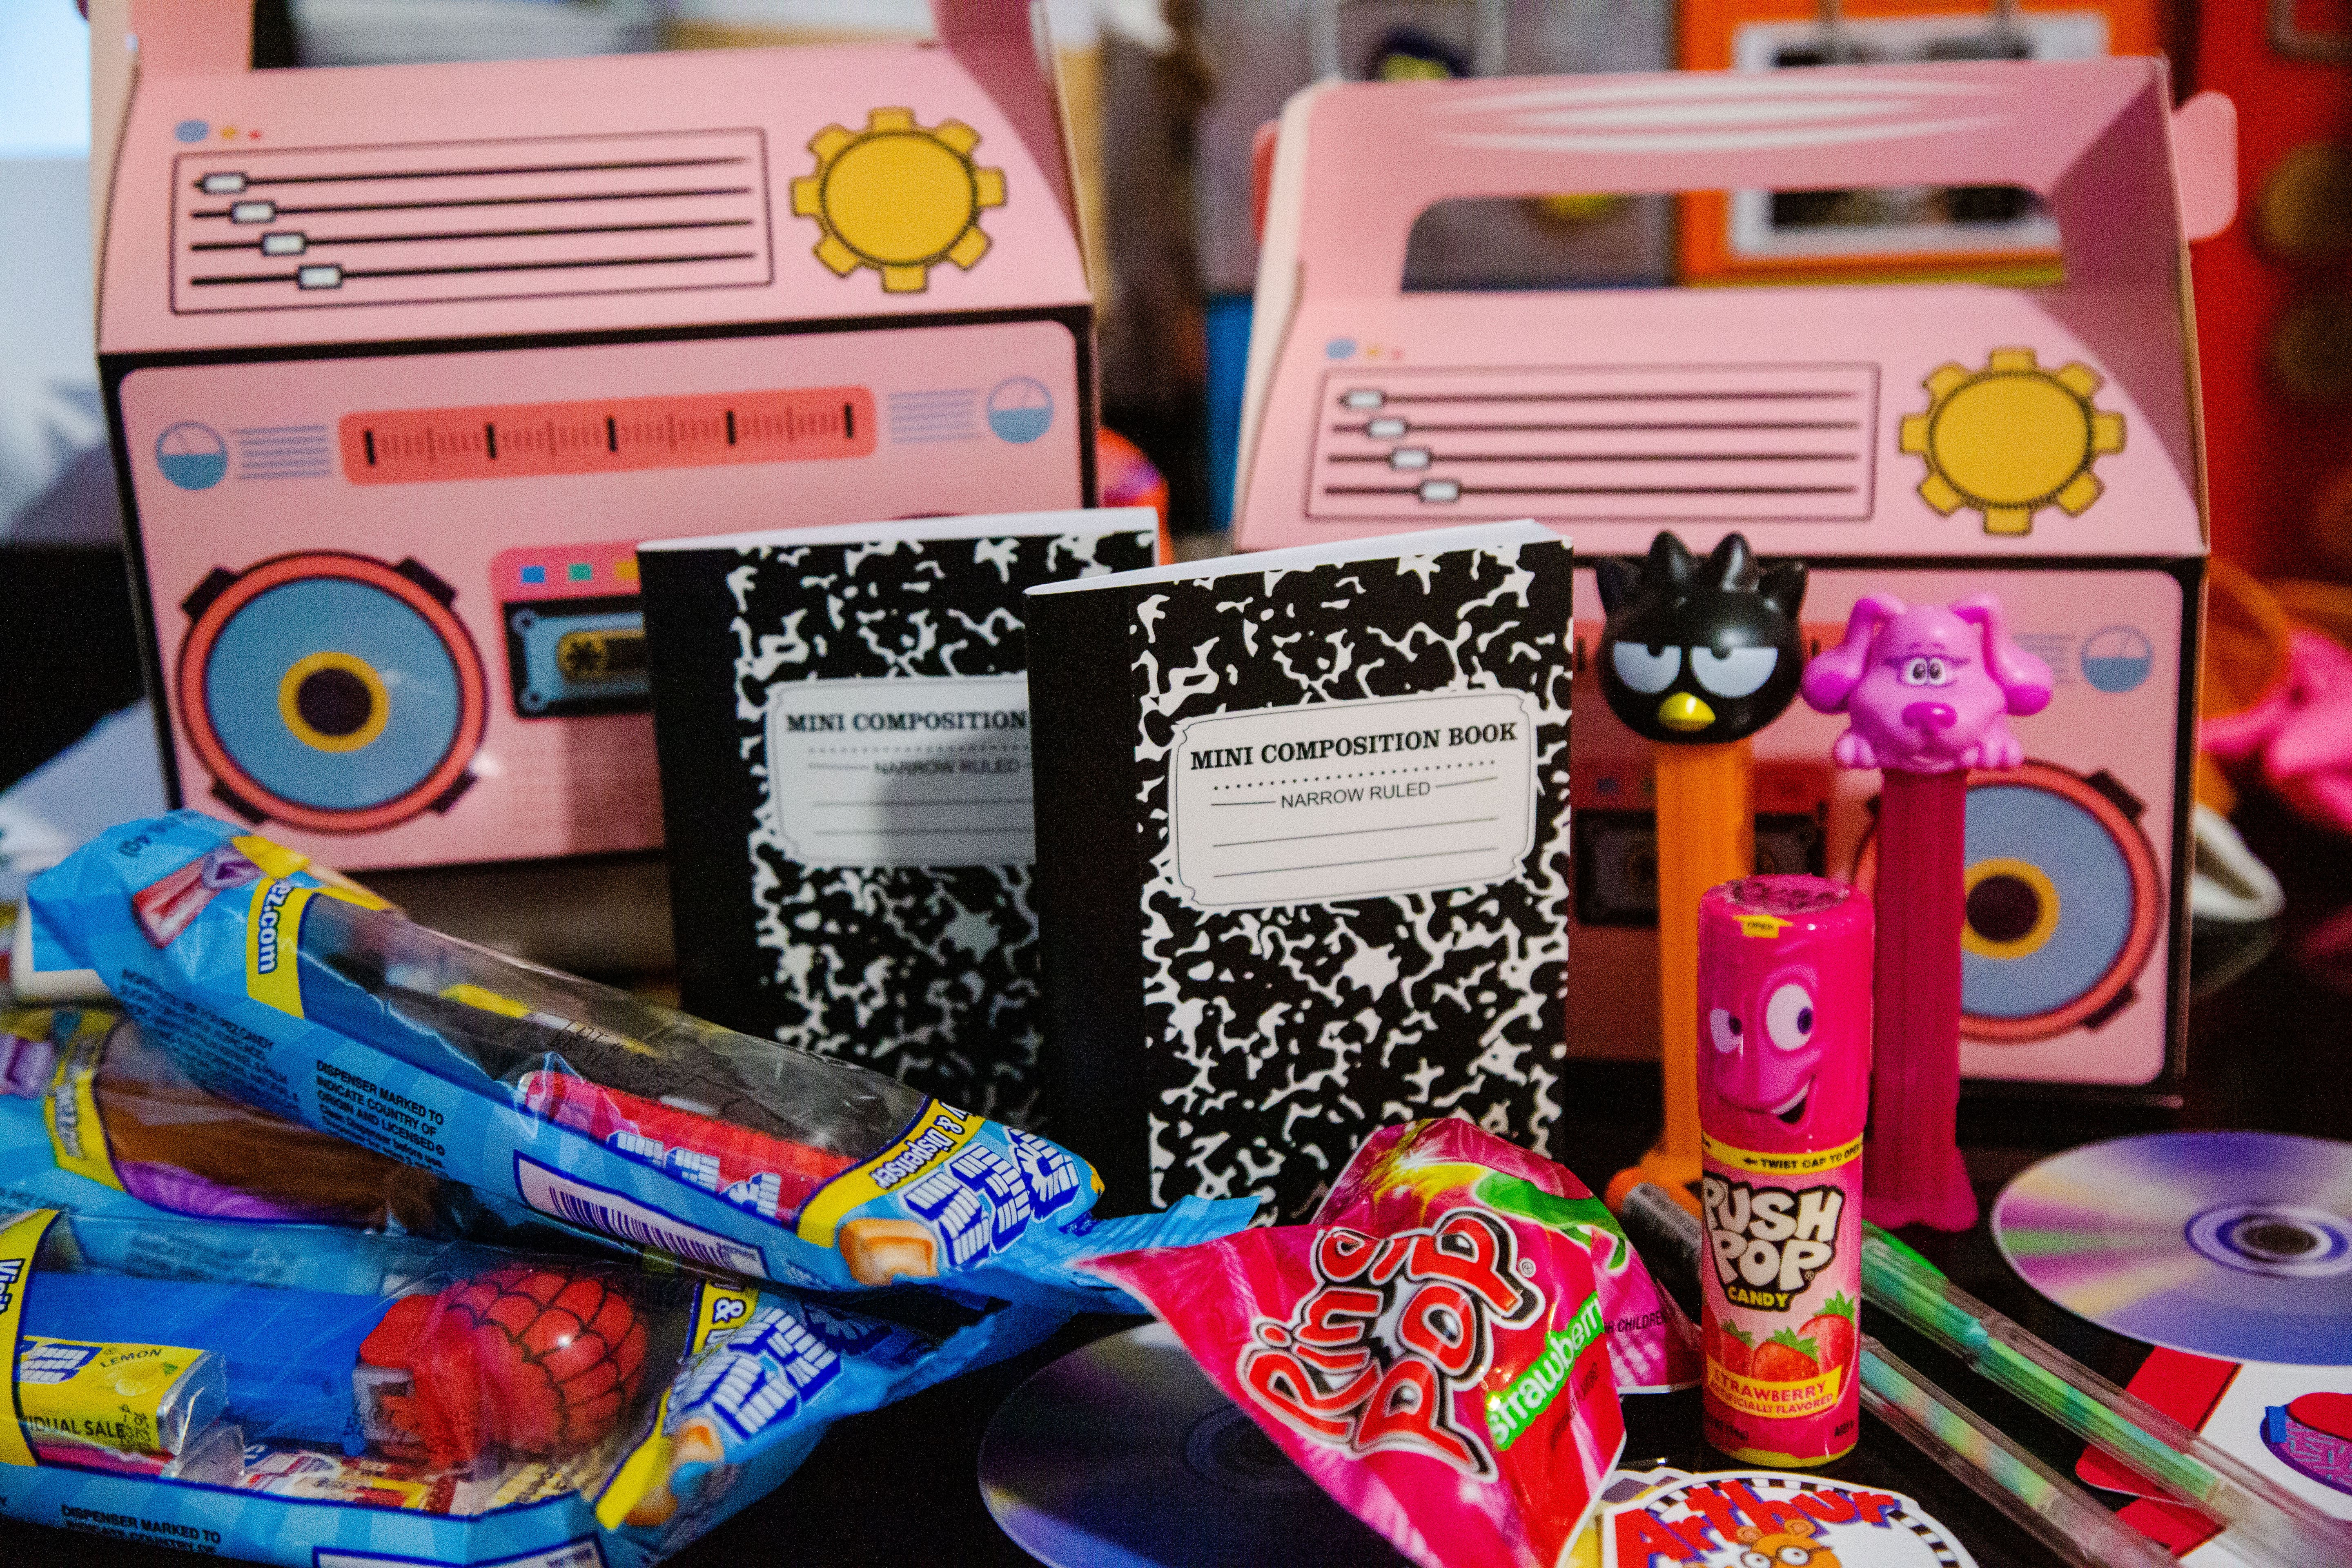 90s theme birthday party favor boxes, boomboxes, PEZ dispensers, ring pop, push pop, gel pens, mini composition notebooks